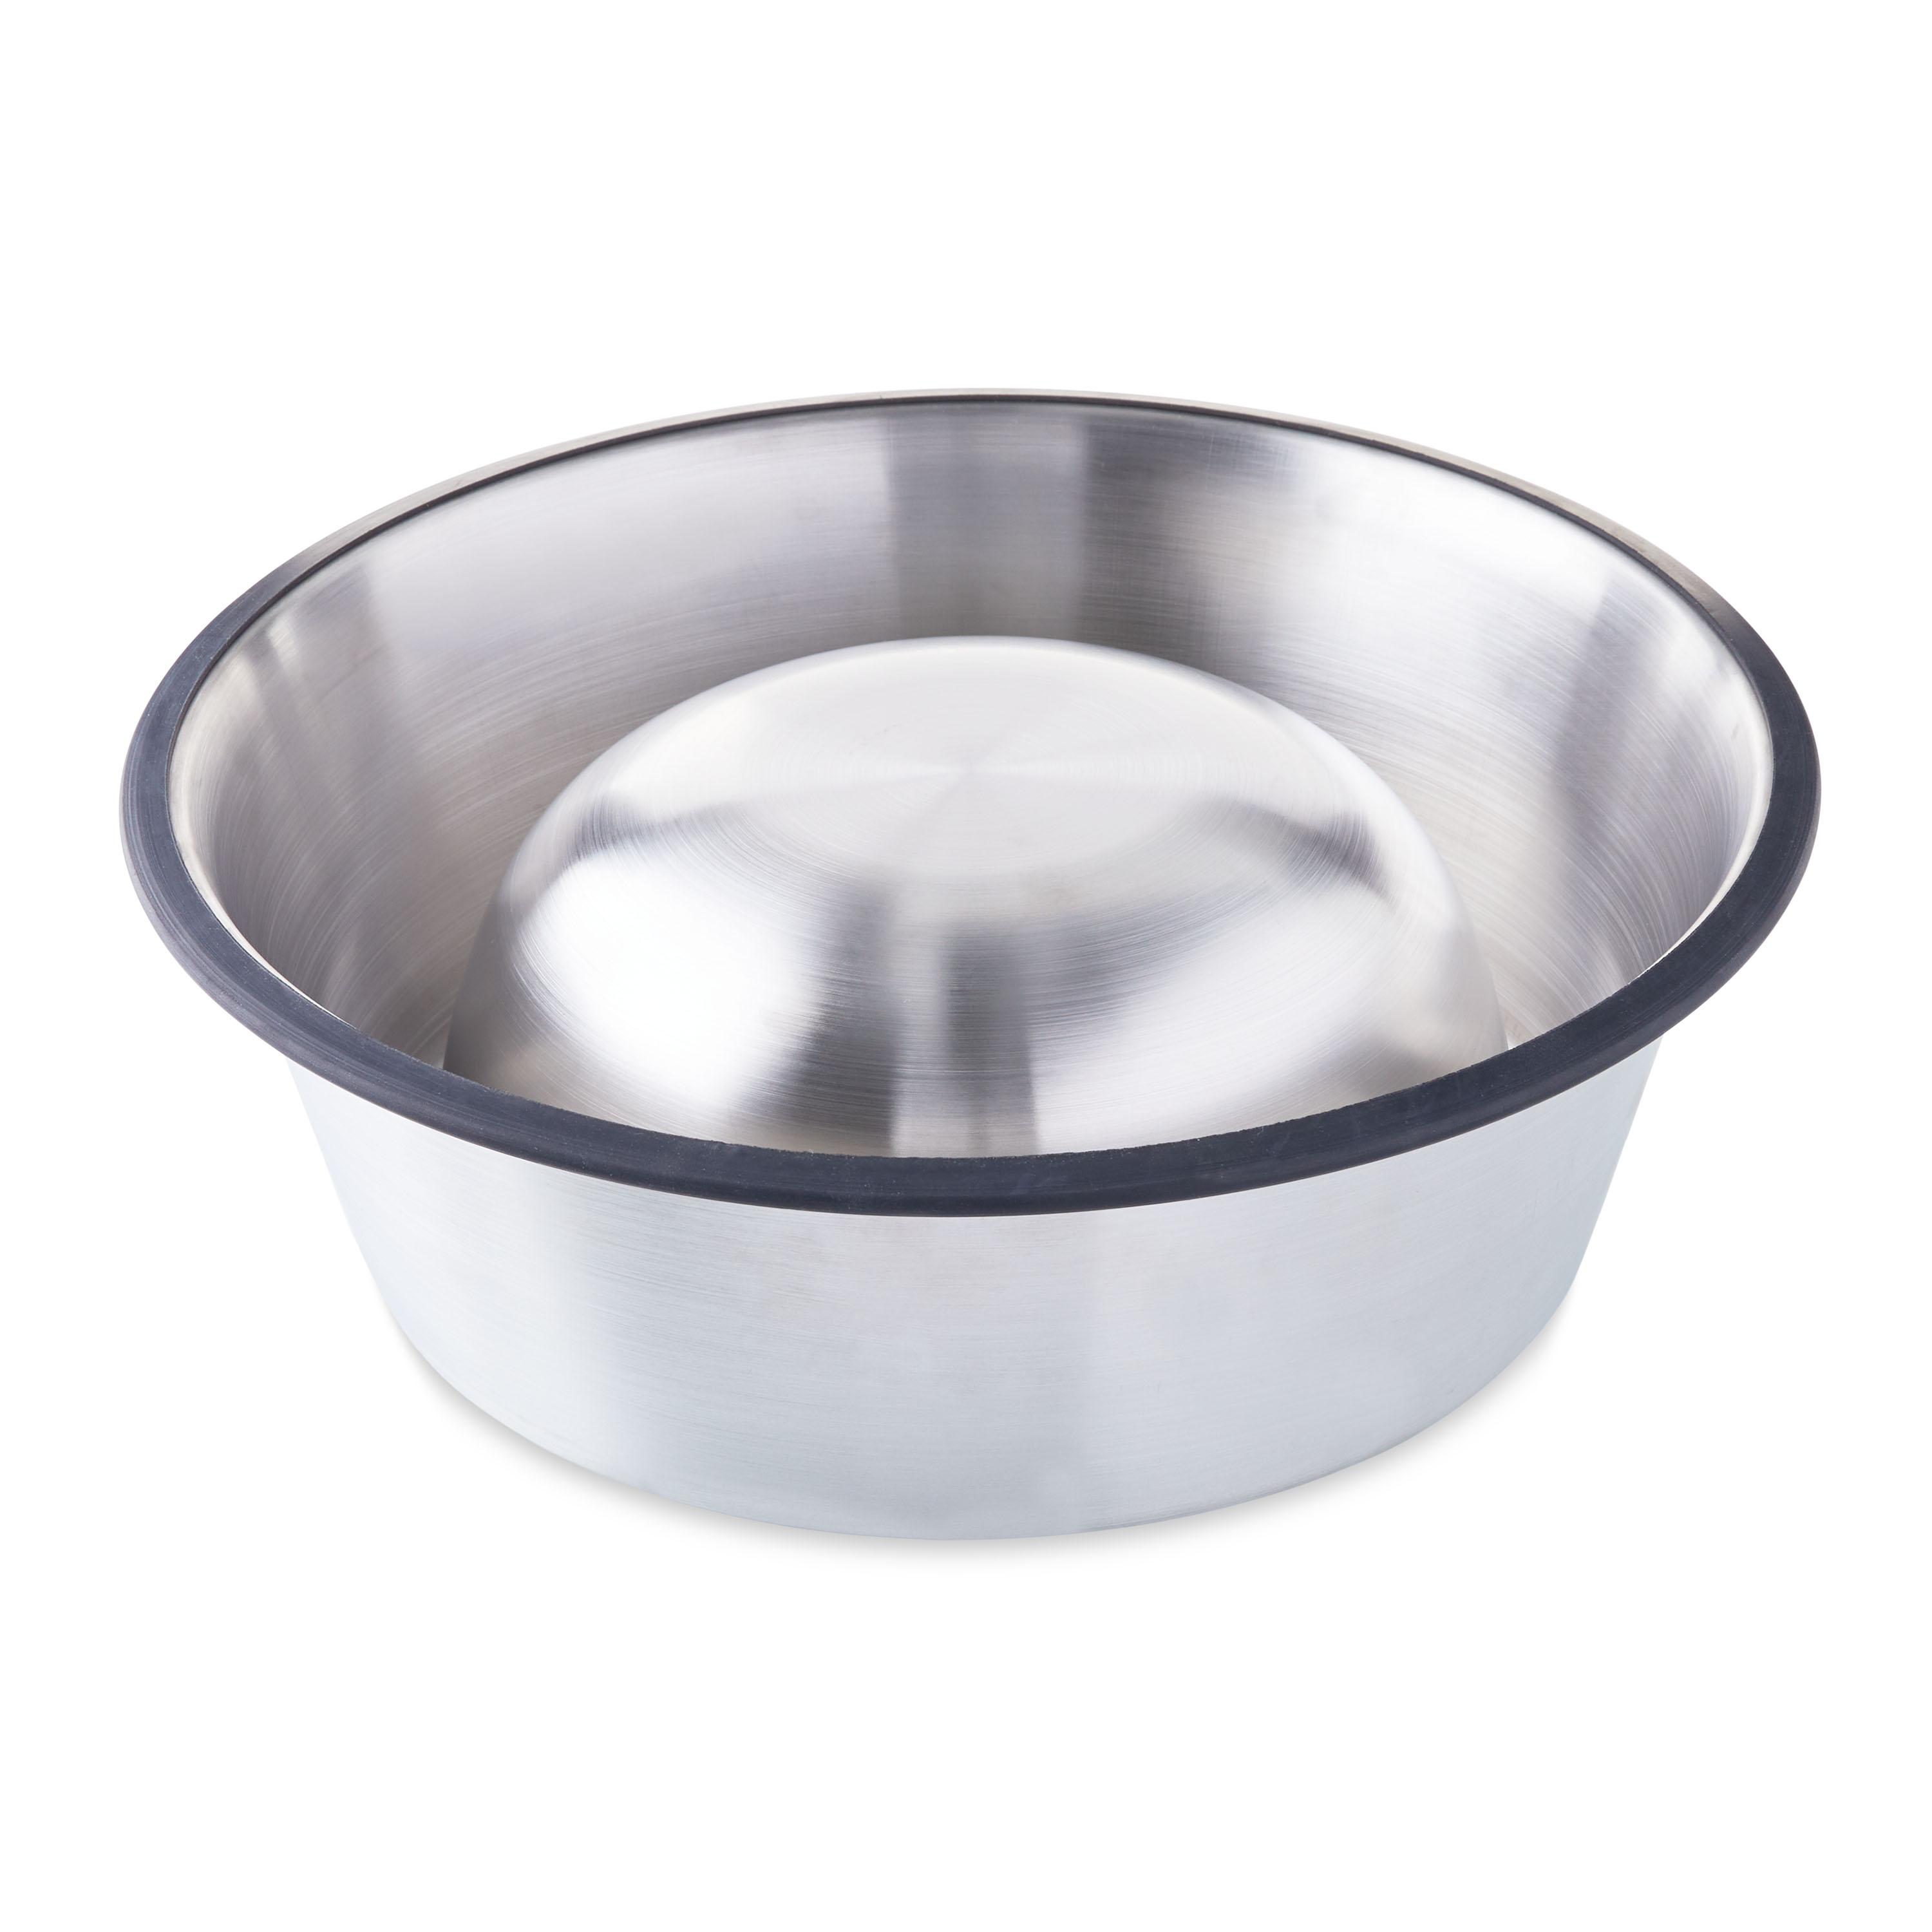 Vibrant Life Stainless Steel Jumbo Dog Bowl, Medium - image 4 of 4